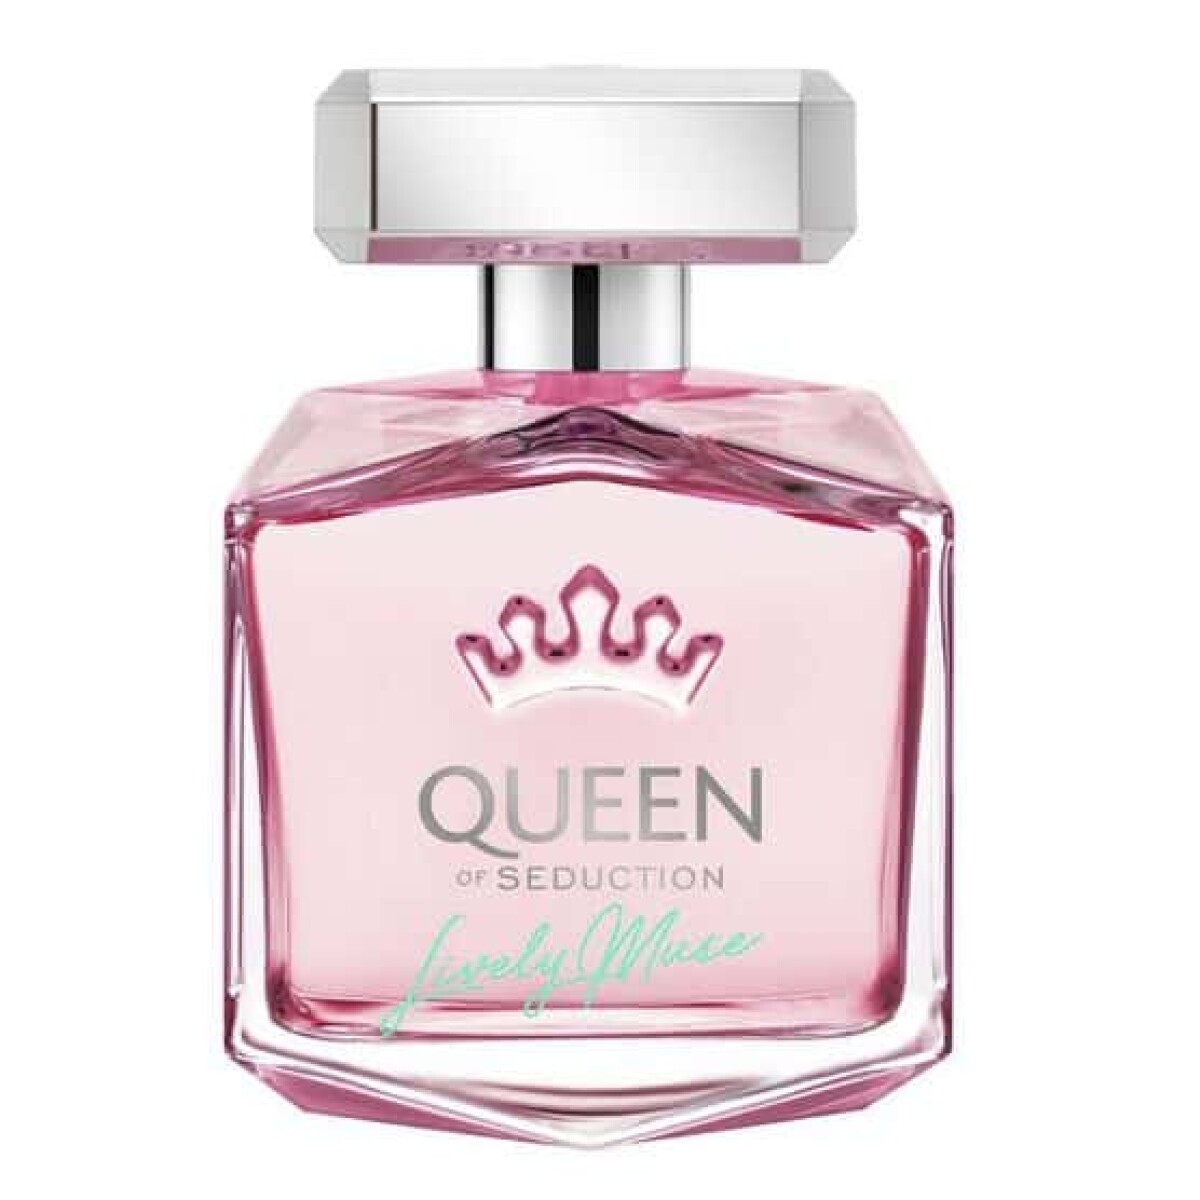 Perfume Antonio Banderas Queen Of Seduction Lively Muse Edt 80 ml 